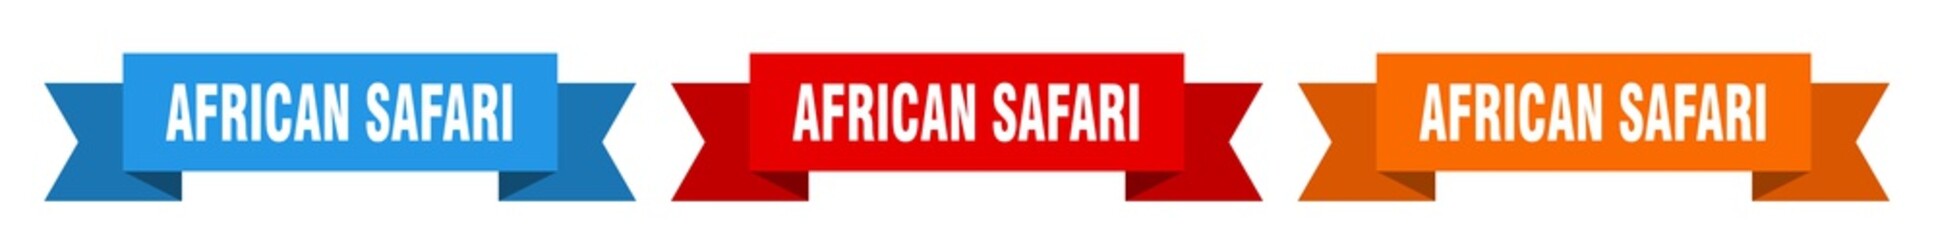 african safari ribbon. african safari isolated paper sign. banner